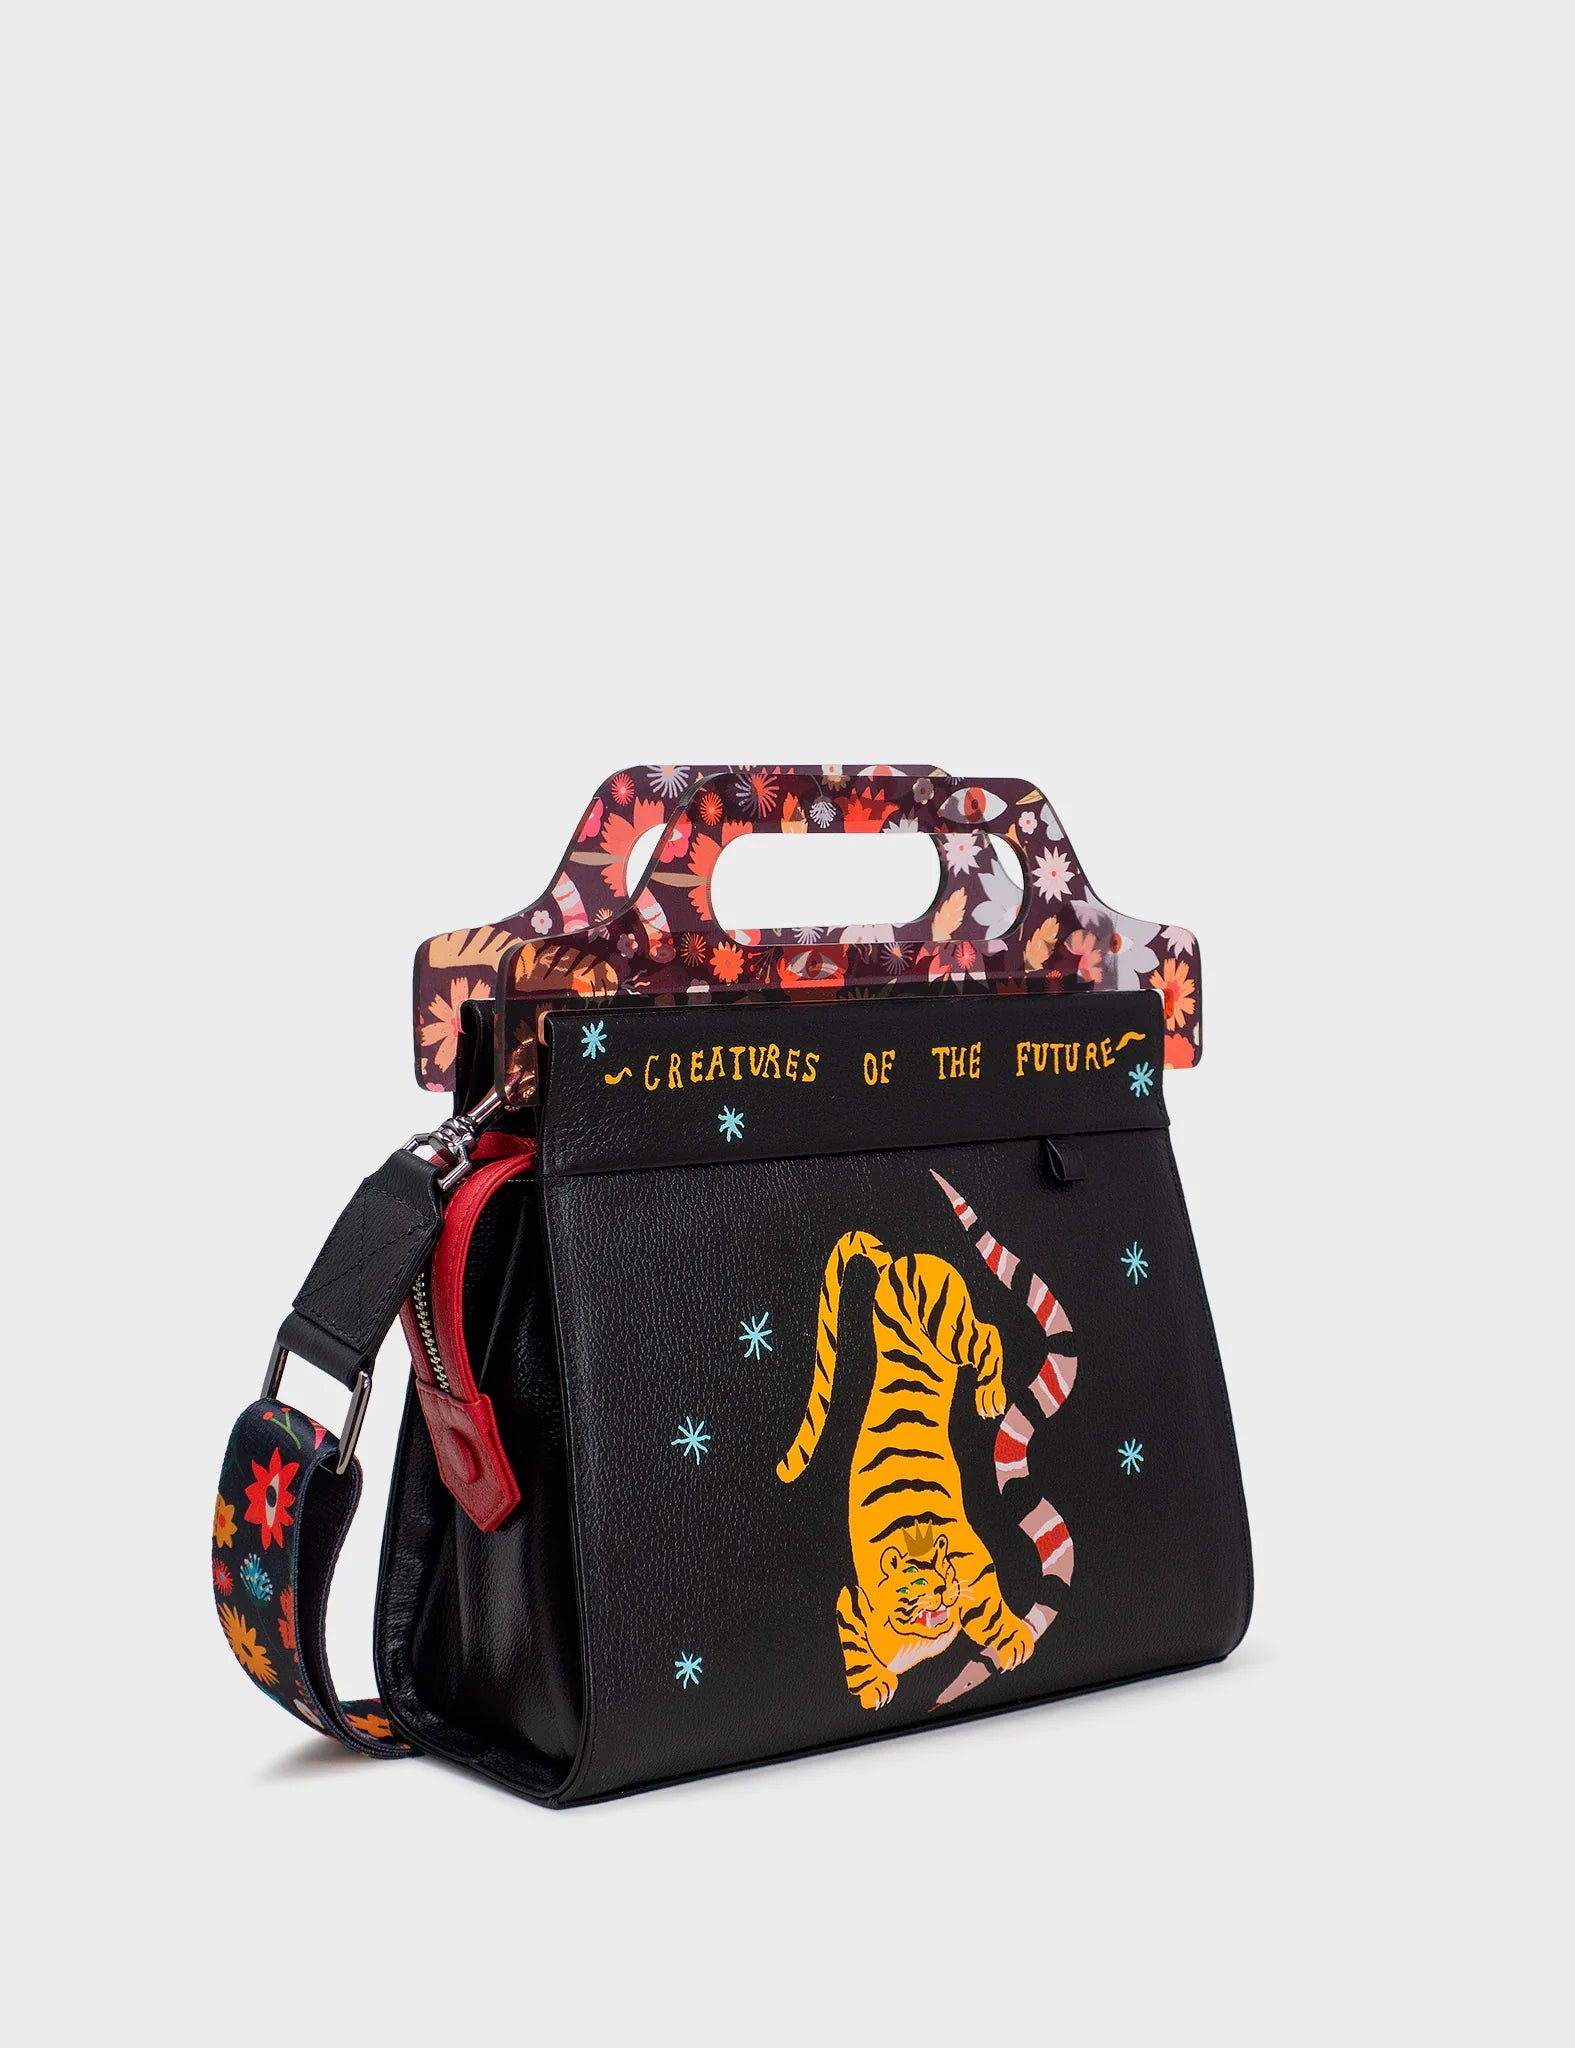 Vali Black Leather Crossbody Handbag Plastic Handle - Tiger And Snake Print - Front corner angle view 